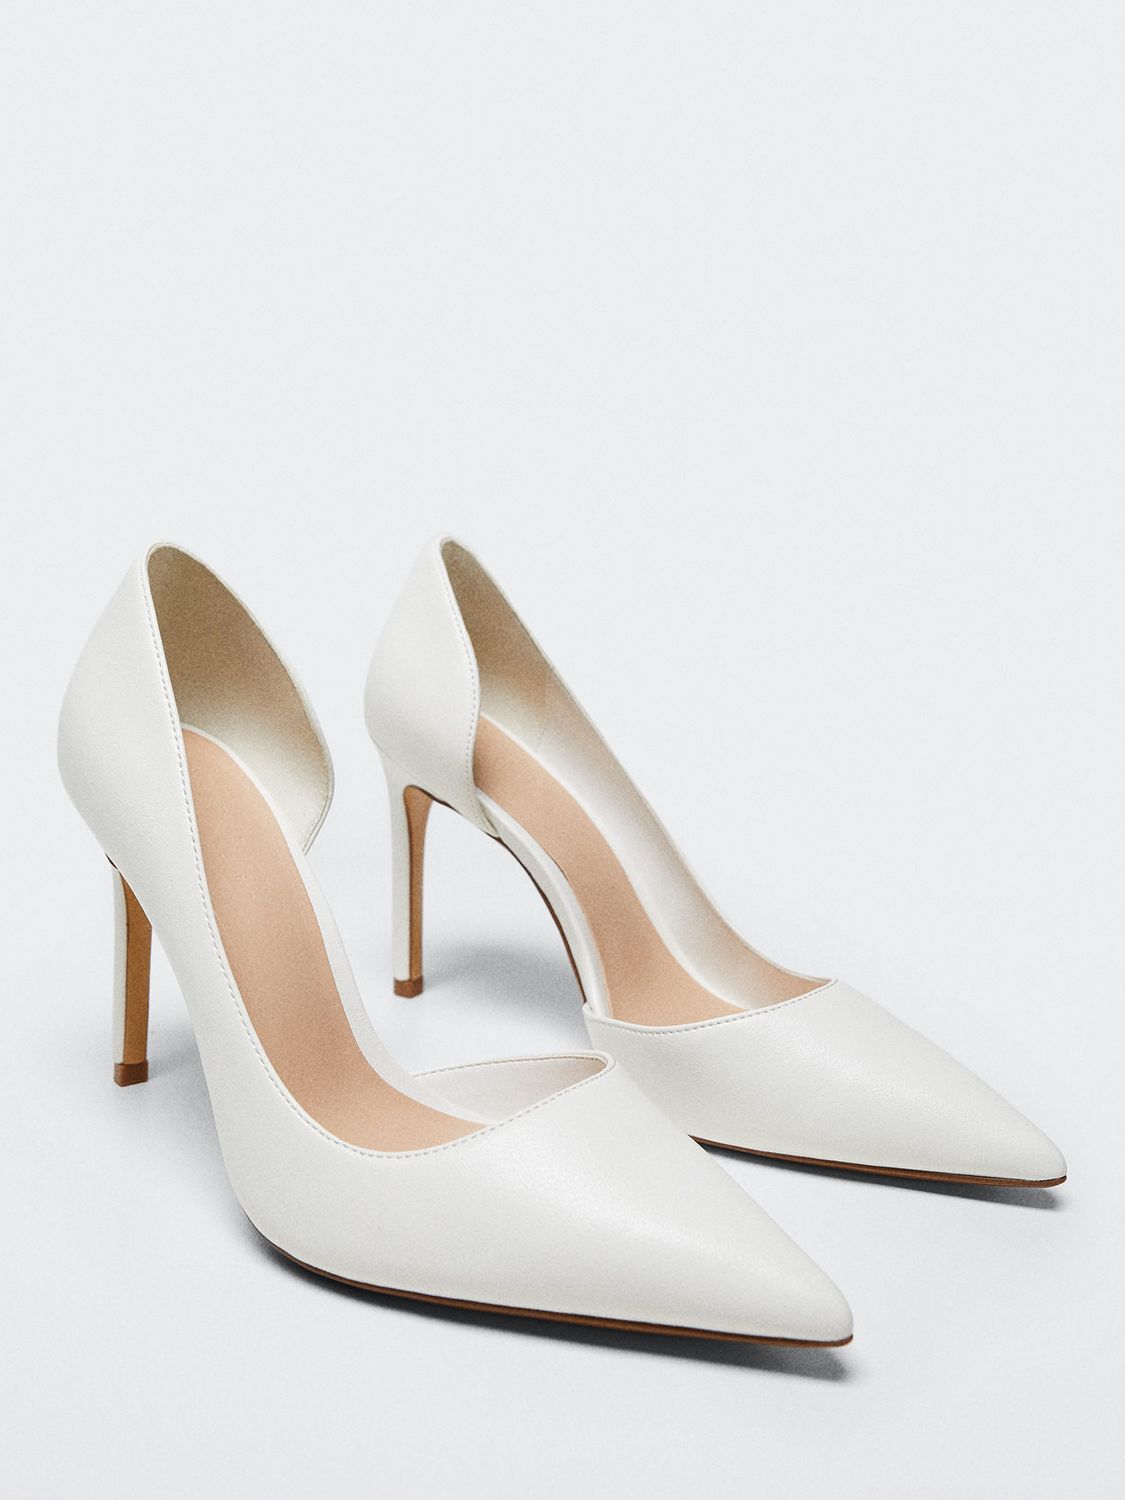 Mango Audrey Stiletto Heel Court Shoes, White at John Lewis & Partners